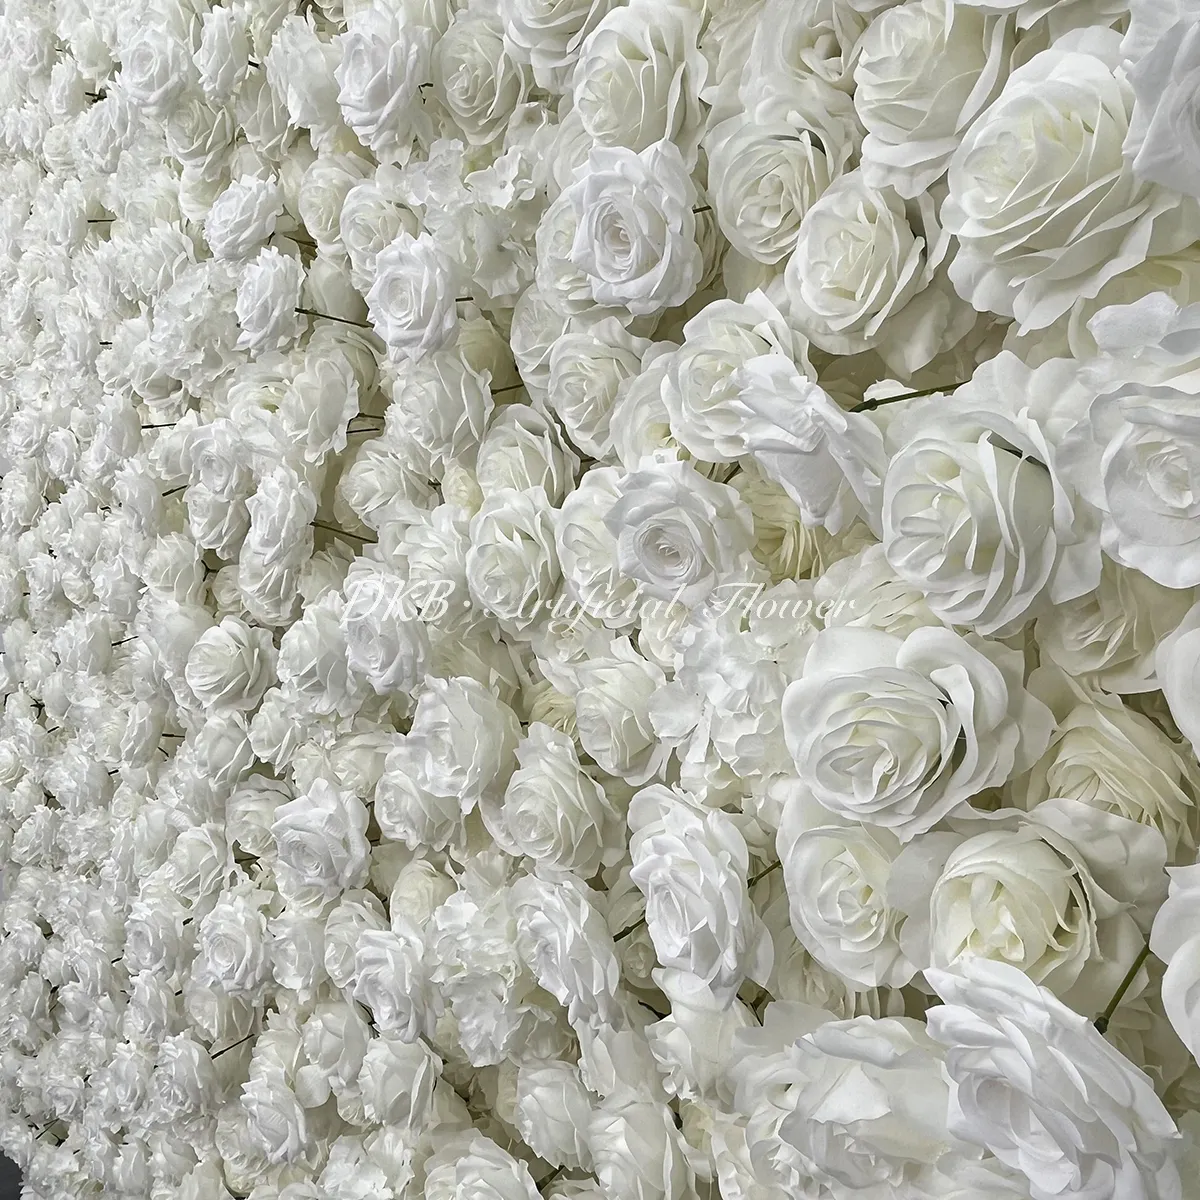 DKB Factory Customize White Silk Rose Flower Wall Floral Arrangement 5D Artificial Flower Wall For Wedding Party Decor